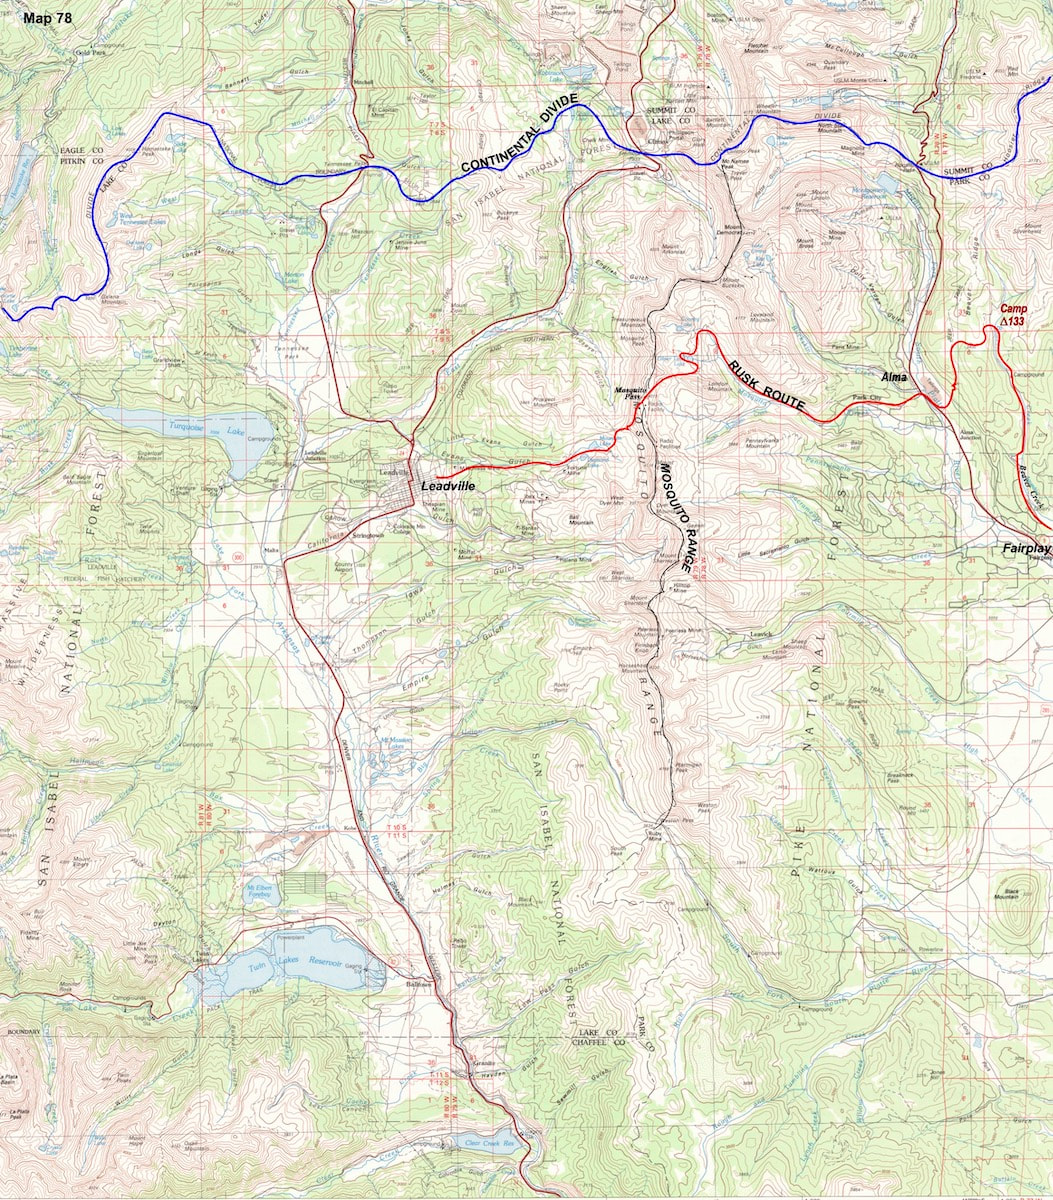 CDT Map 78